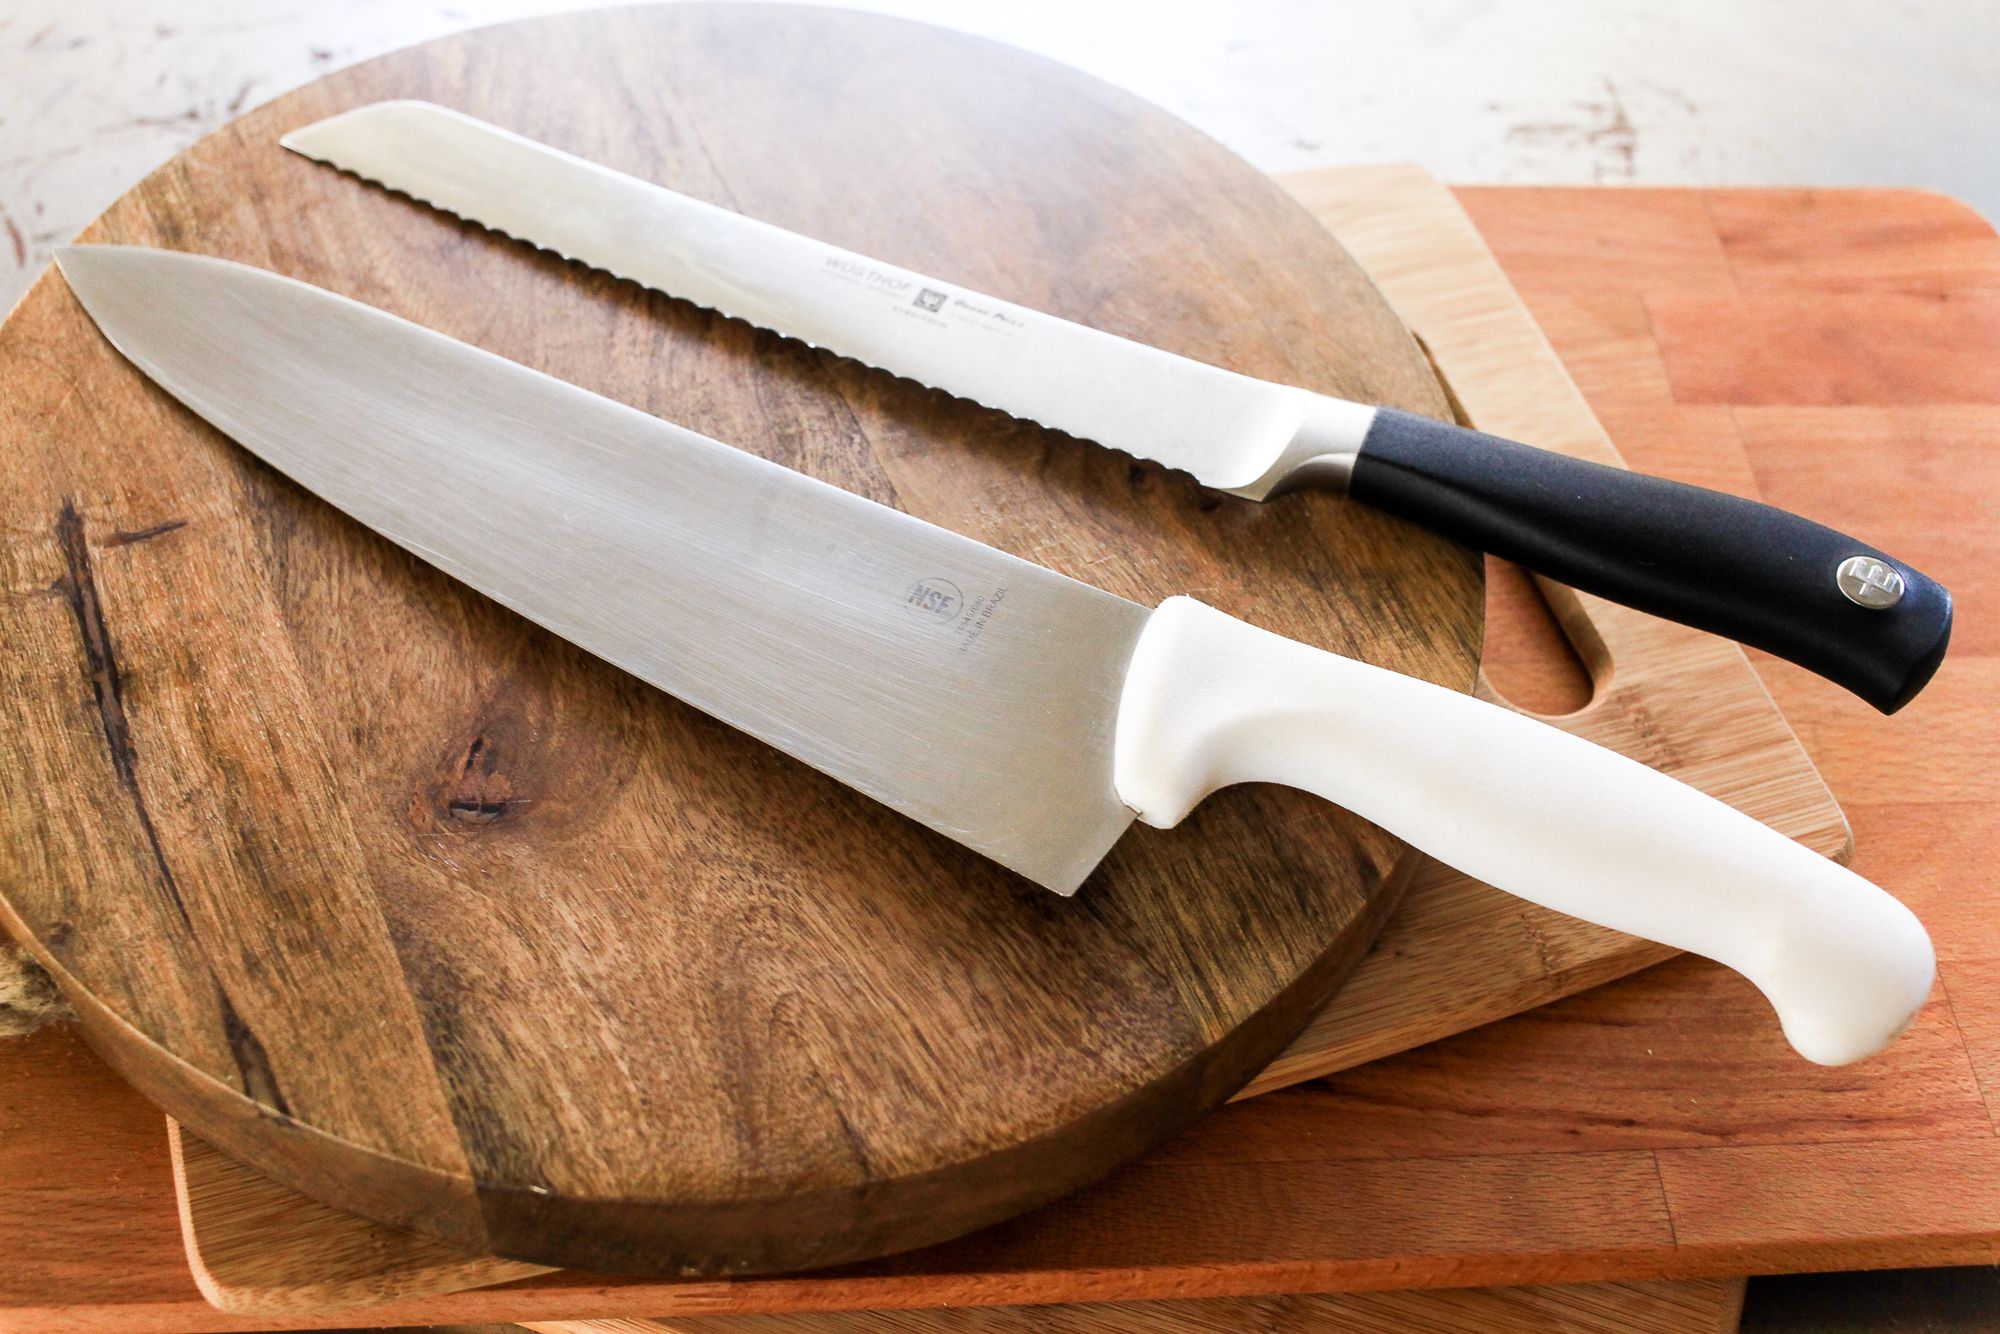 Knife Handles 101! - How to Make Knife Handles 